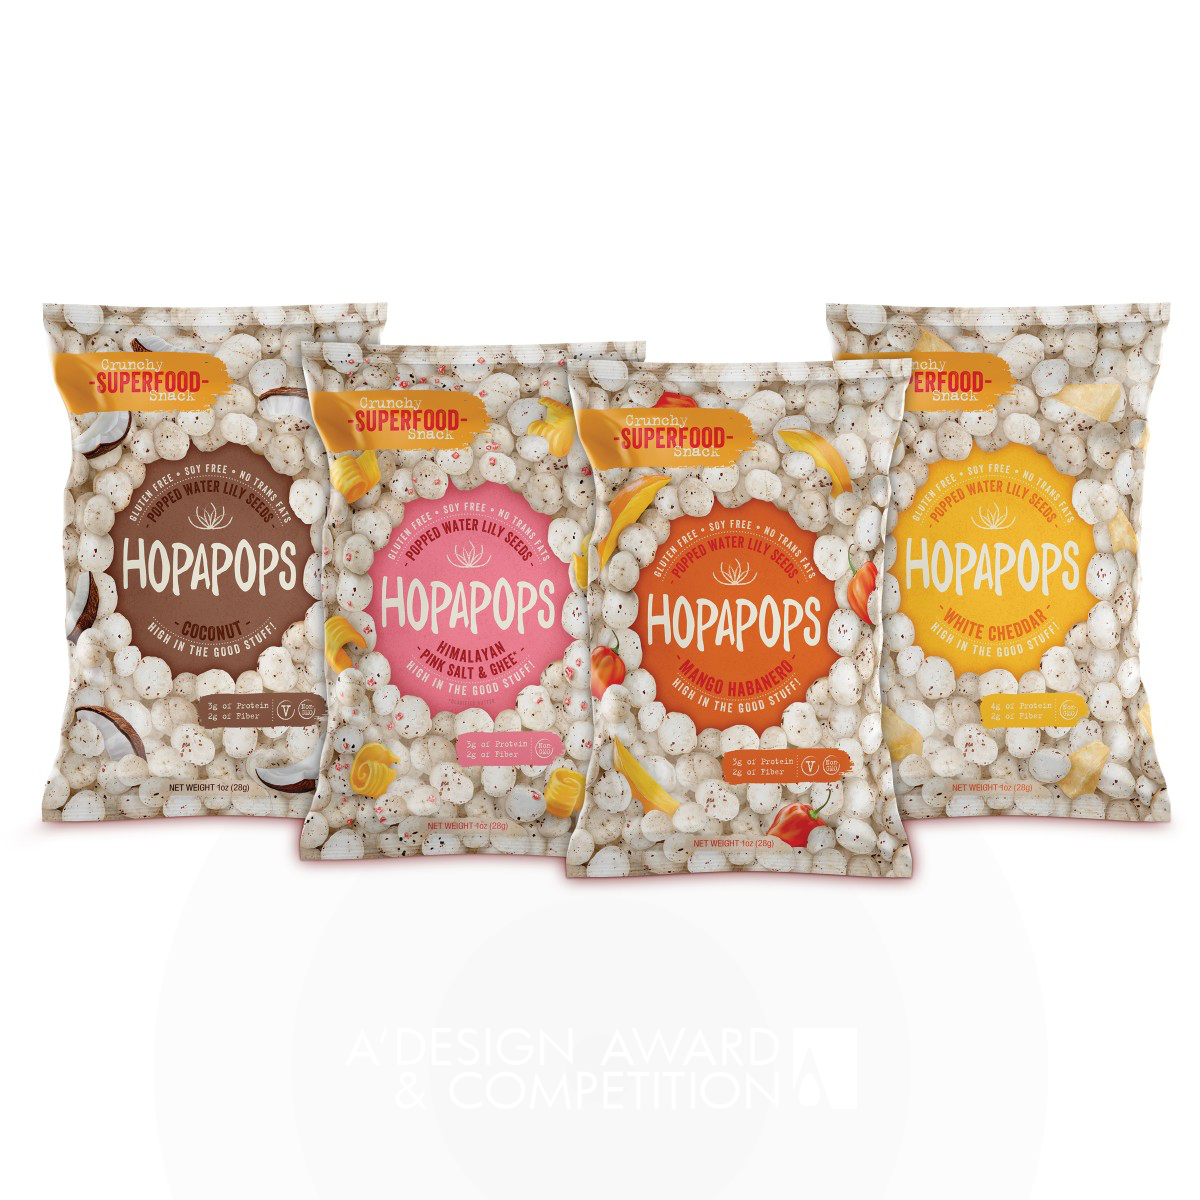 Hopapops Healthy Snack Food by Angela Spindler Iron Packaging Design Award Winner 2020 